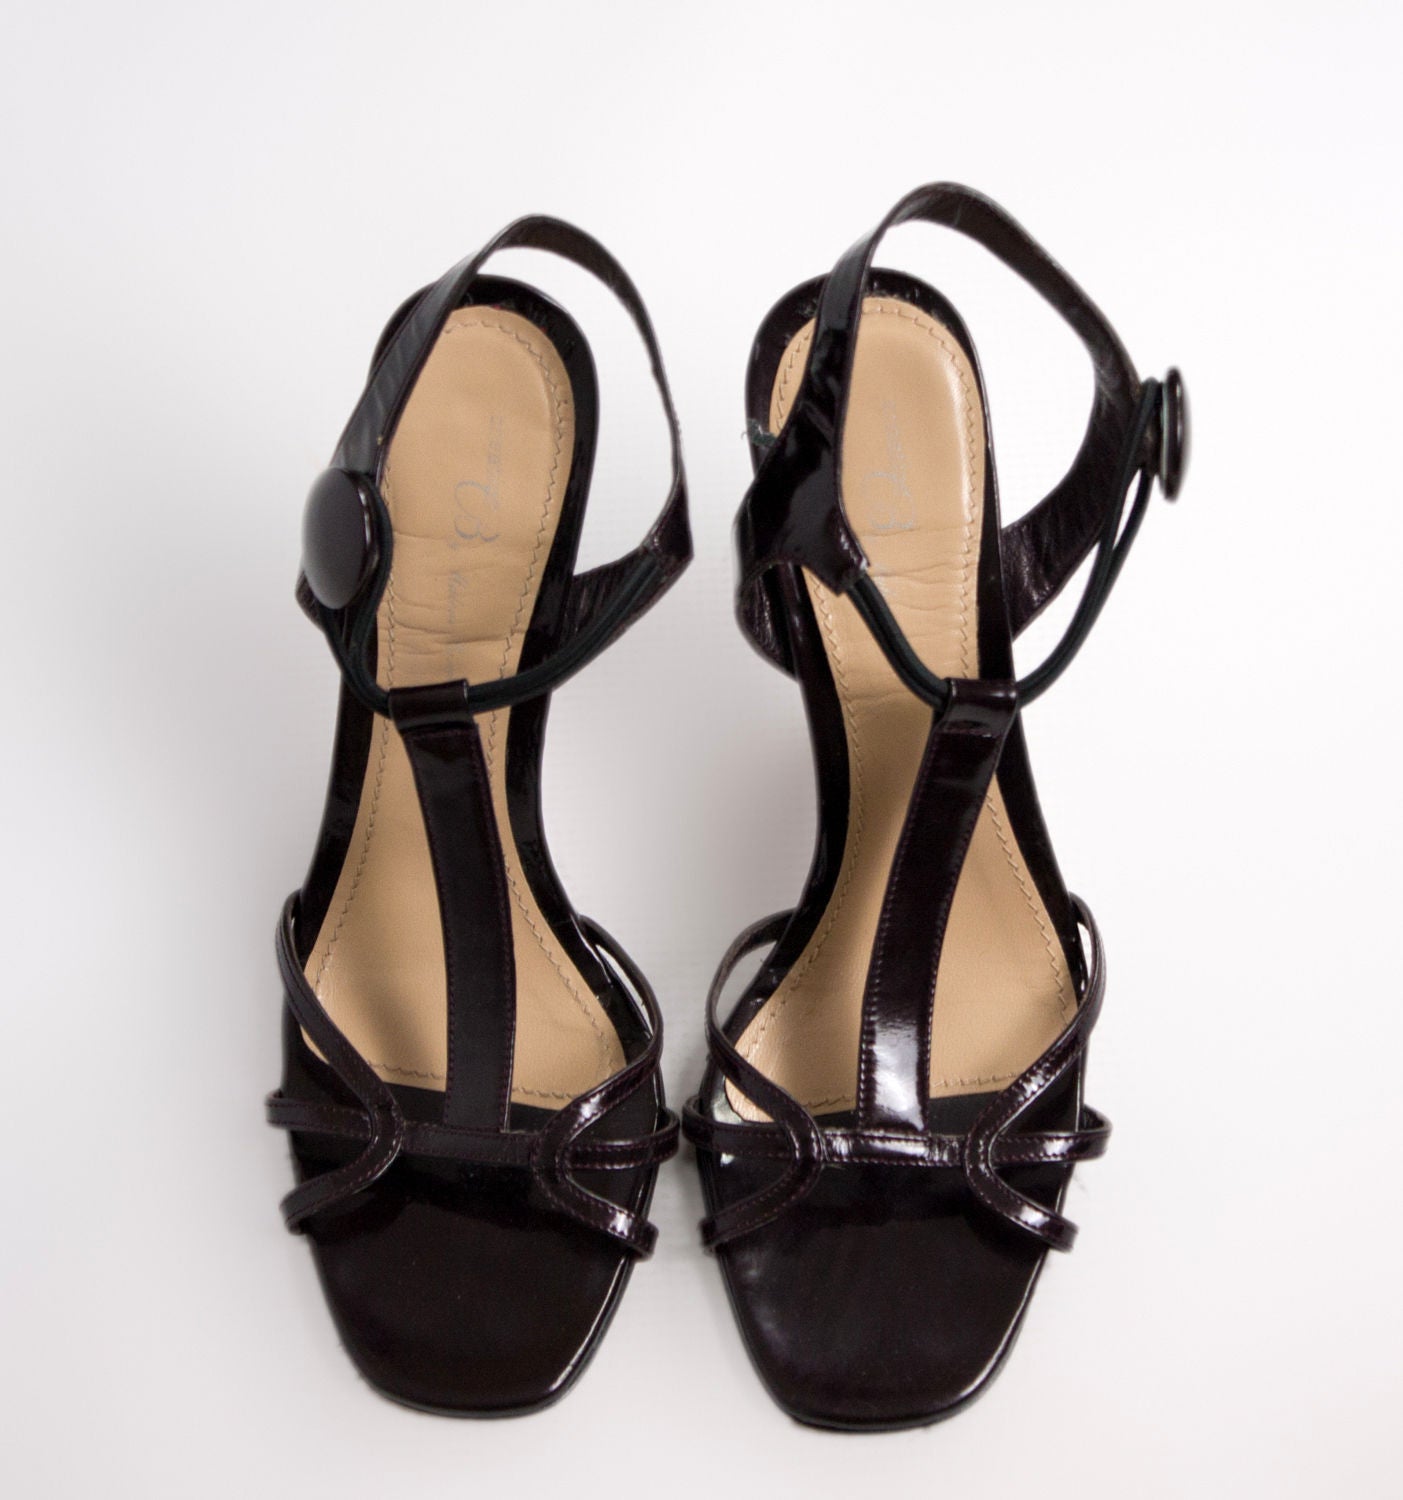 MALENE BIRGER Stiletto Heel Strappy Sandals, US6.5/ EU37/ UK4 - secondfirst